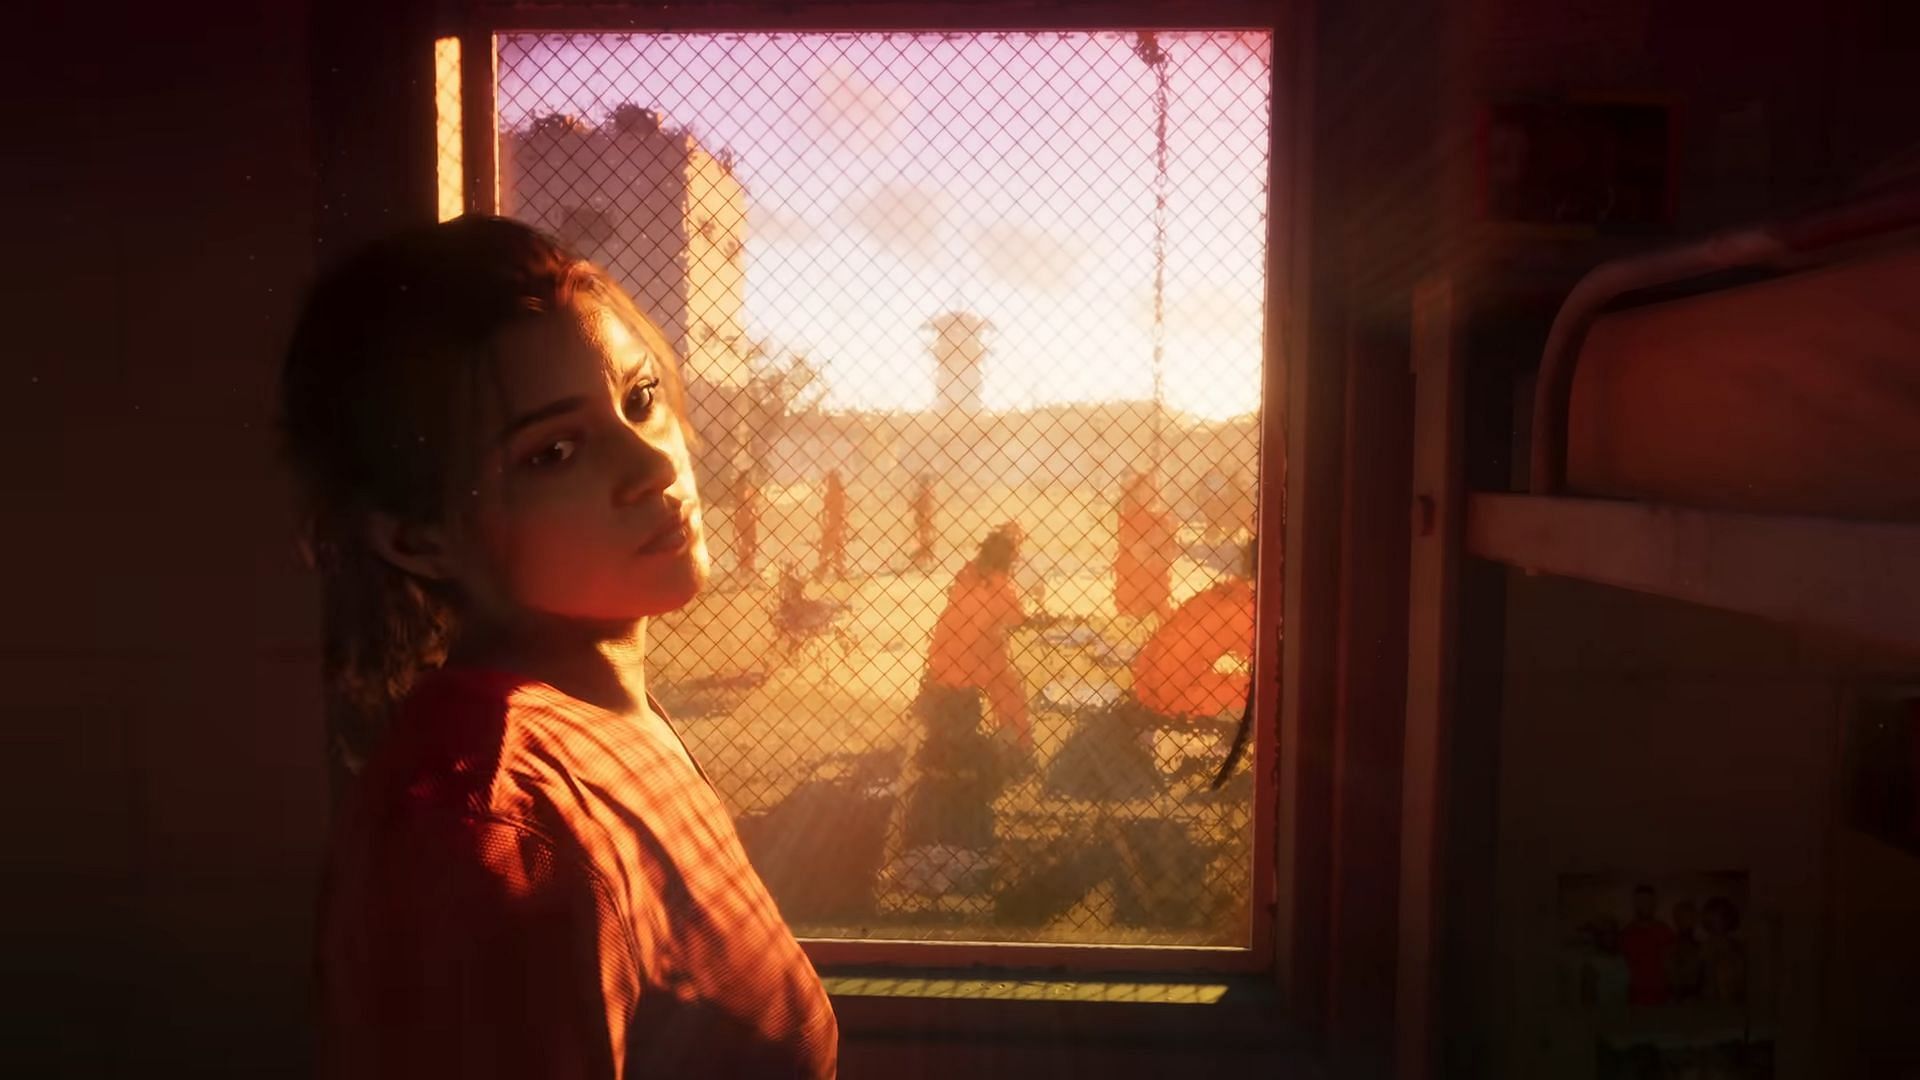 Lucia is seen inside a prison (Image via Rockstar Games)